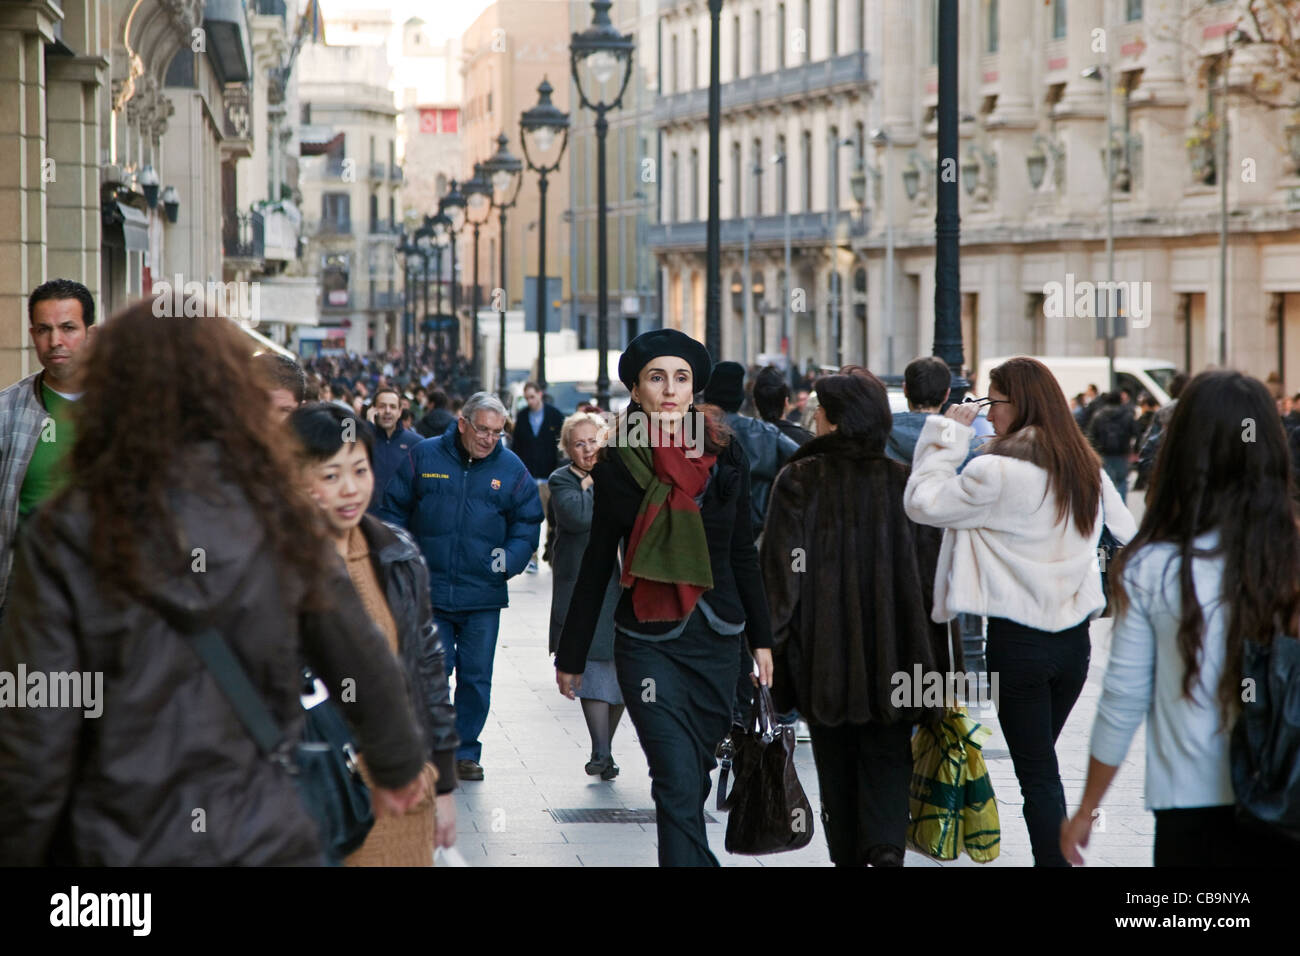 Fashionably dressed woman walking in shopping street in Barcelona, Spain Stock Photo